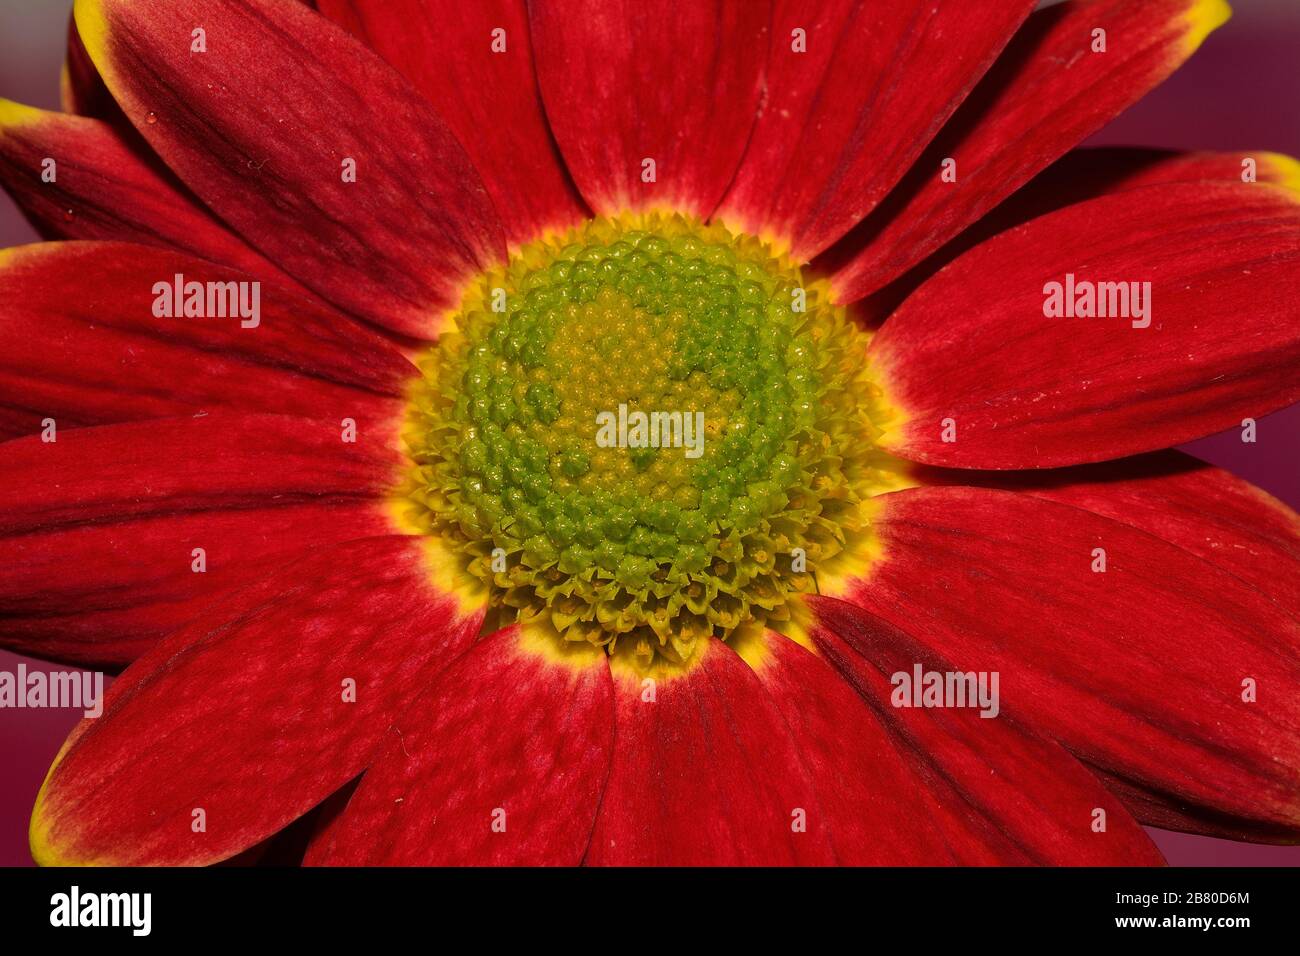 Flower hrysanthemum close up macro photo Stock Photo